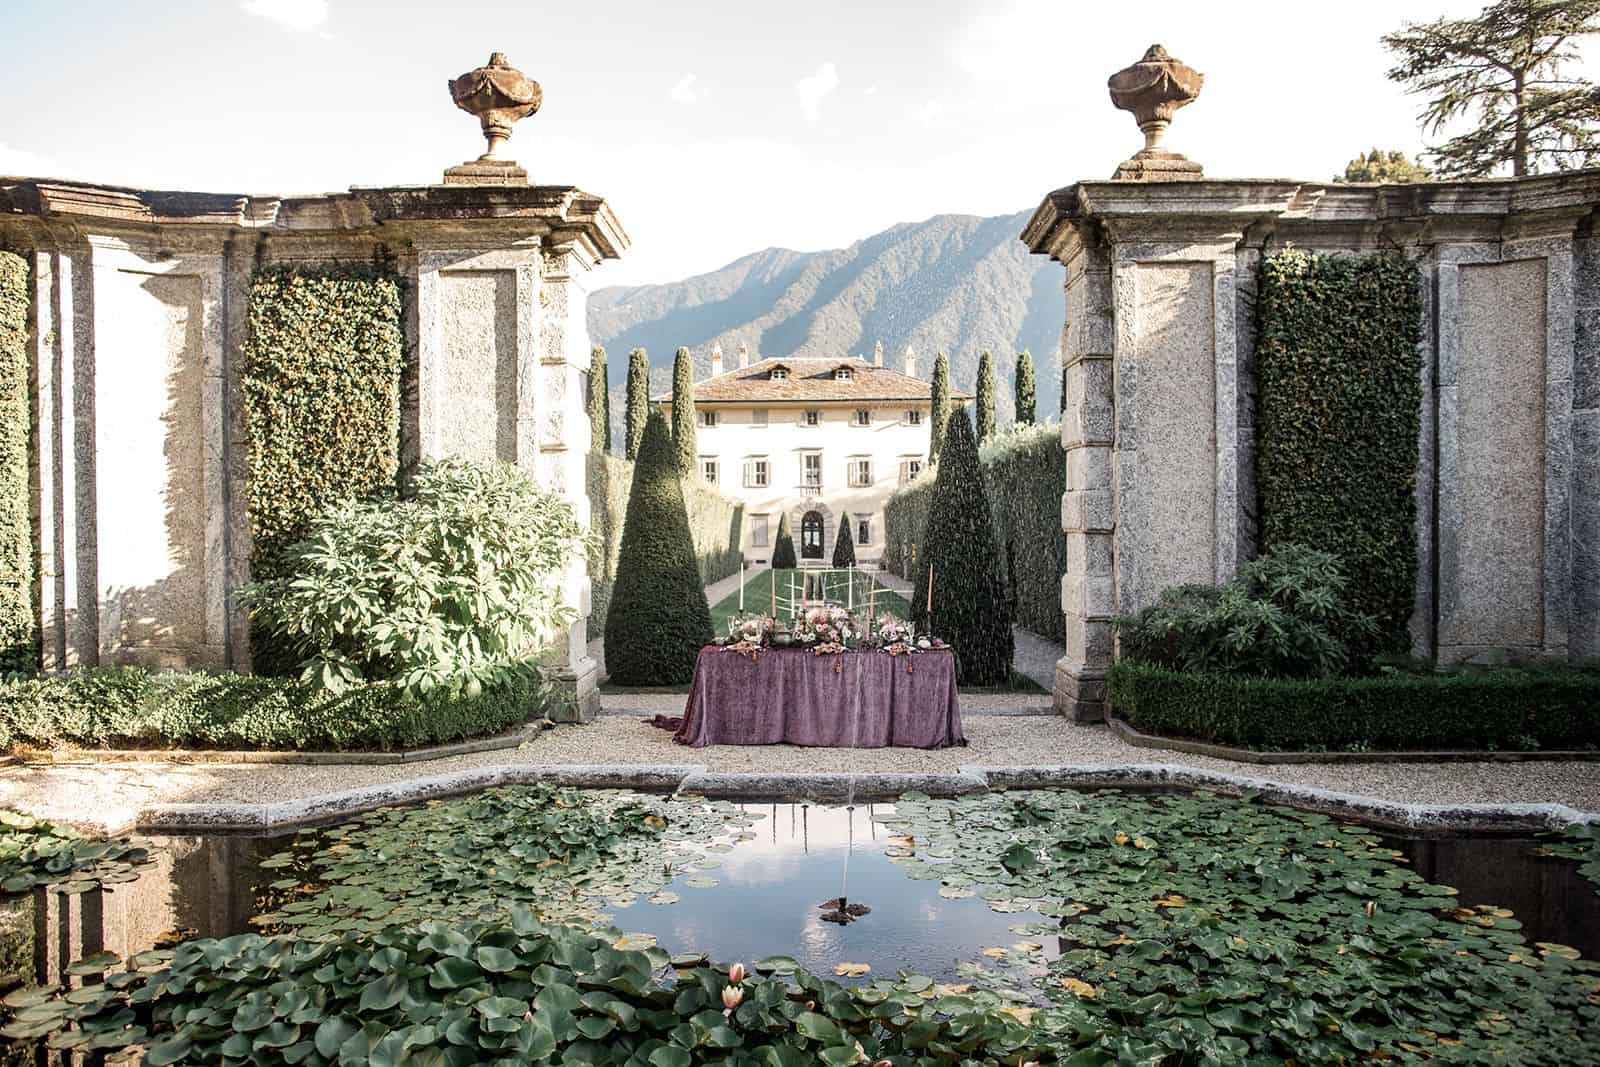 Villa Balbiano in Lake Como Italy serves as wedding venue for styled shoot